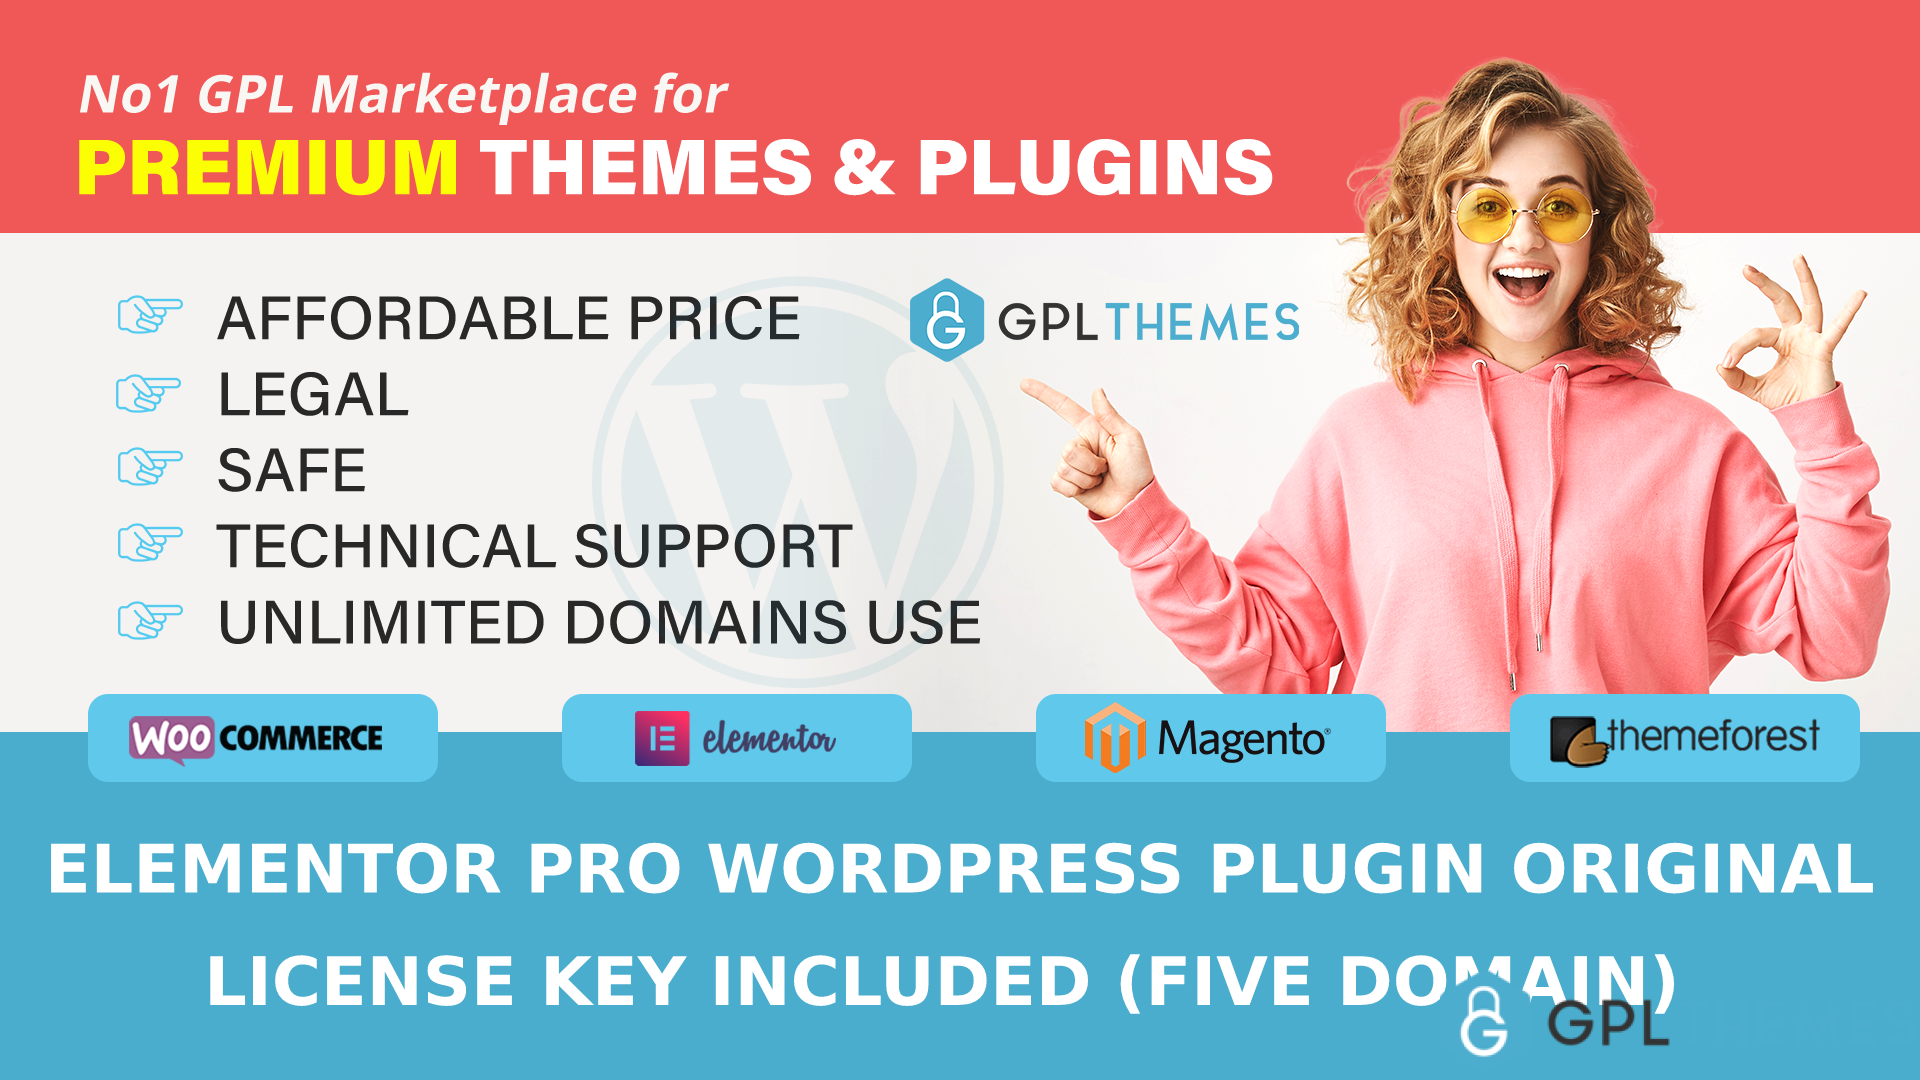 Elementor Pro WordPress Plugin Original License key Included (Five domain)